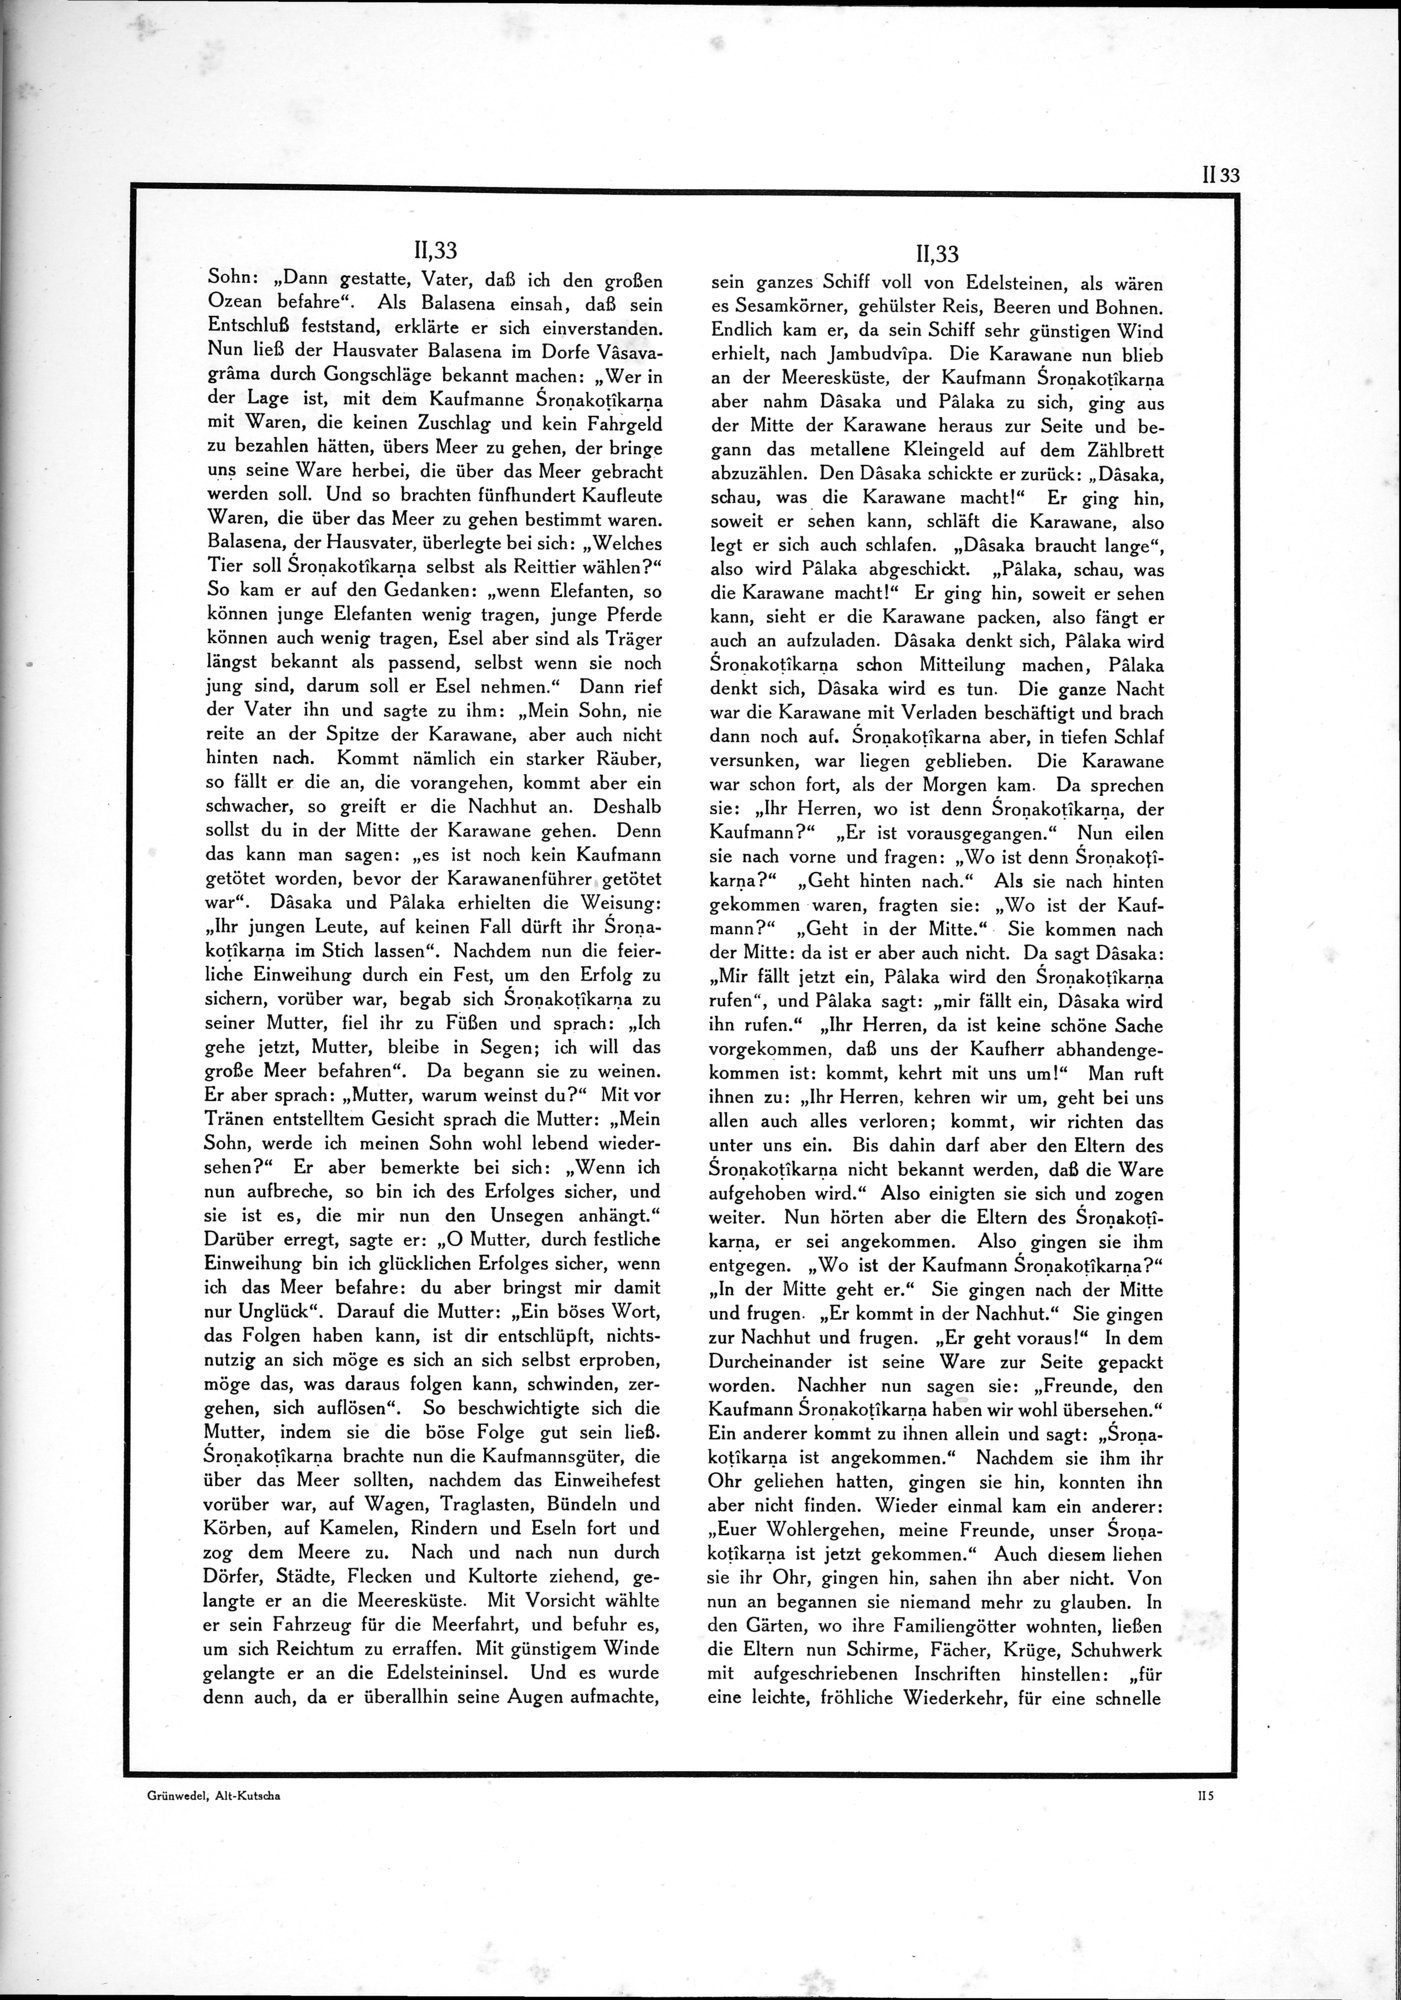 Alt-Kutscha : vol.1 / Page 139 (Grayscale High Resolution Image)